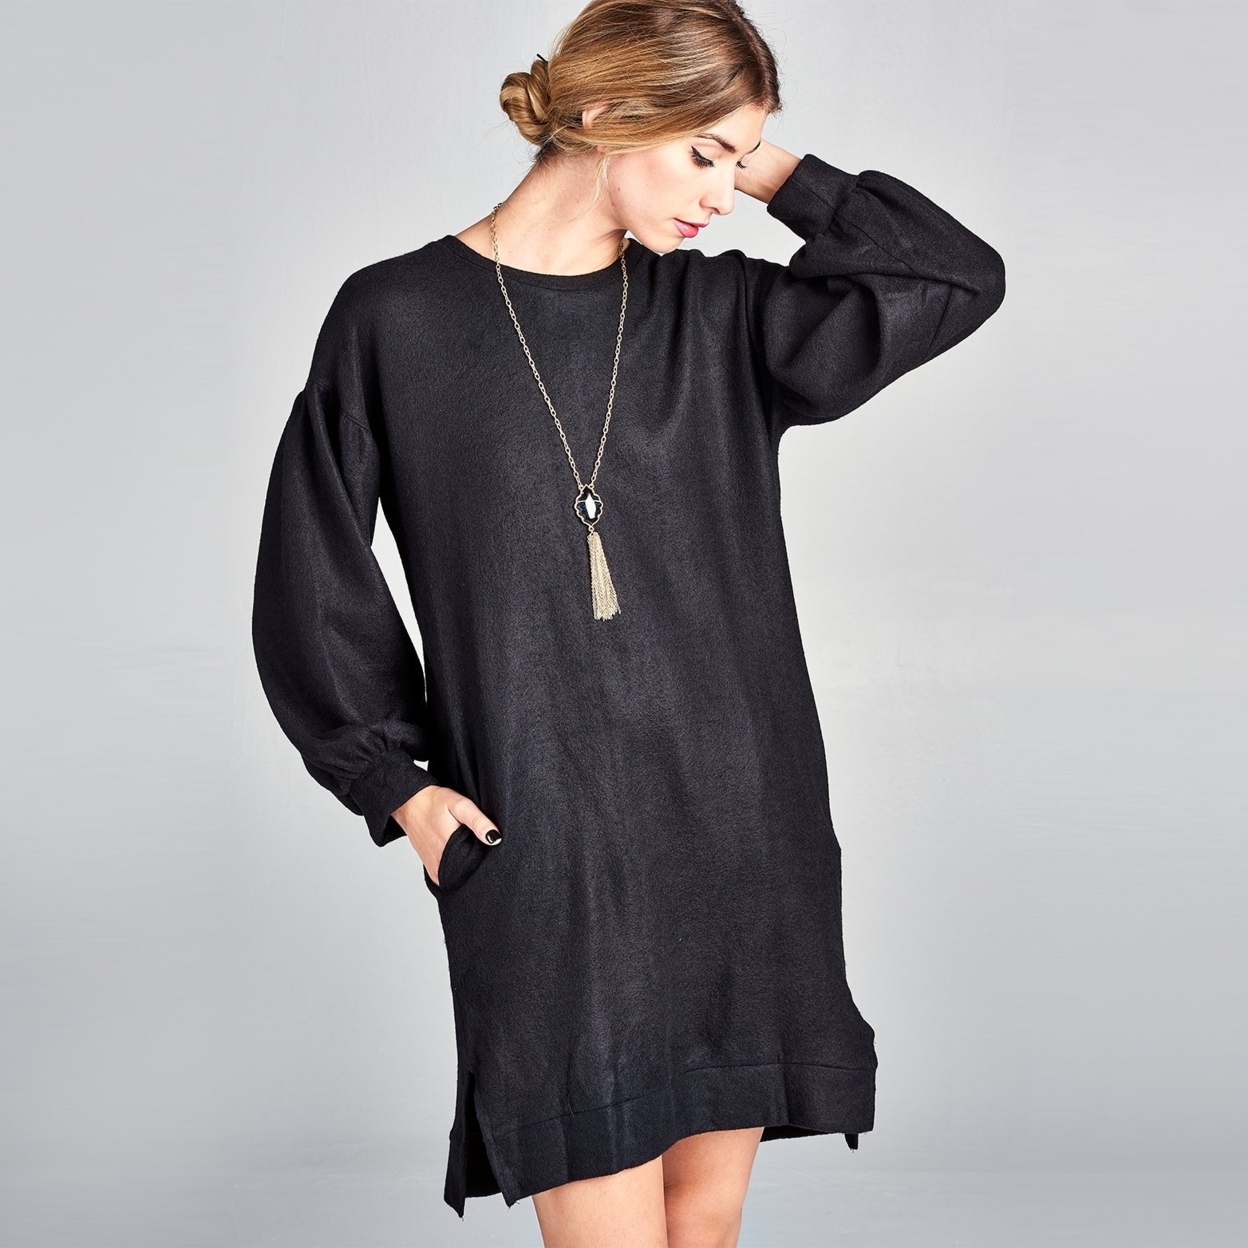 Puff Sleeve Sweater Dress - Black, Small (2-6)